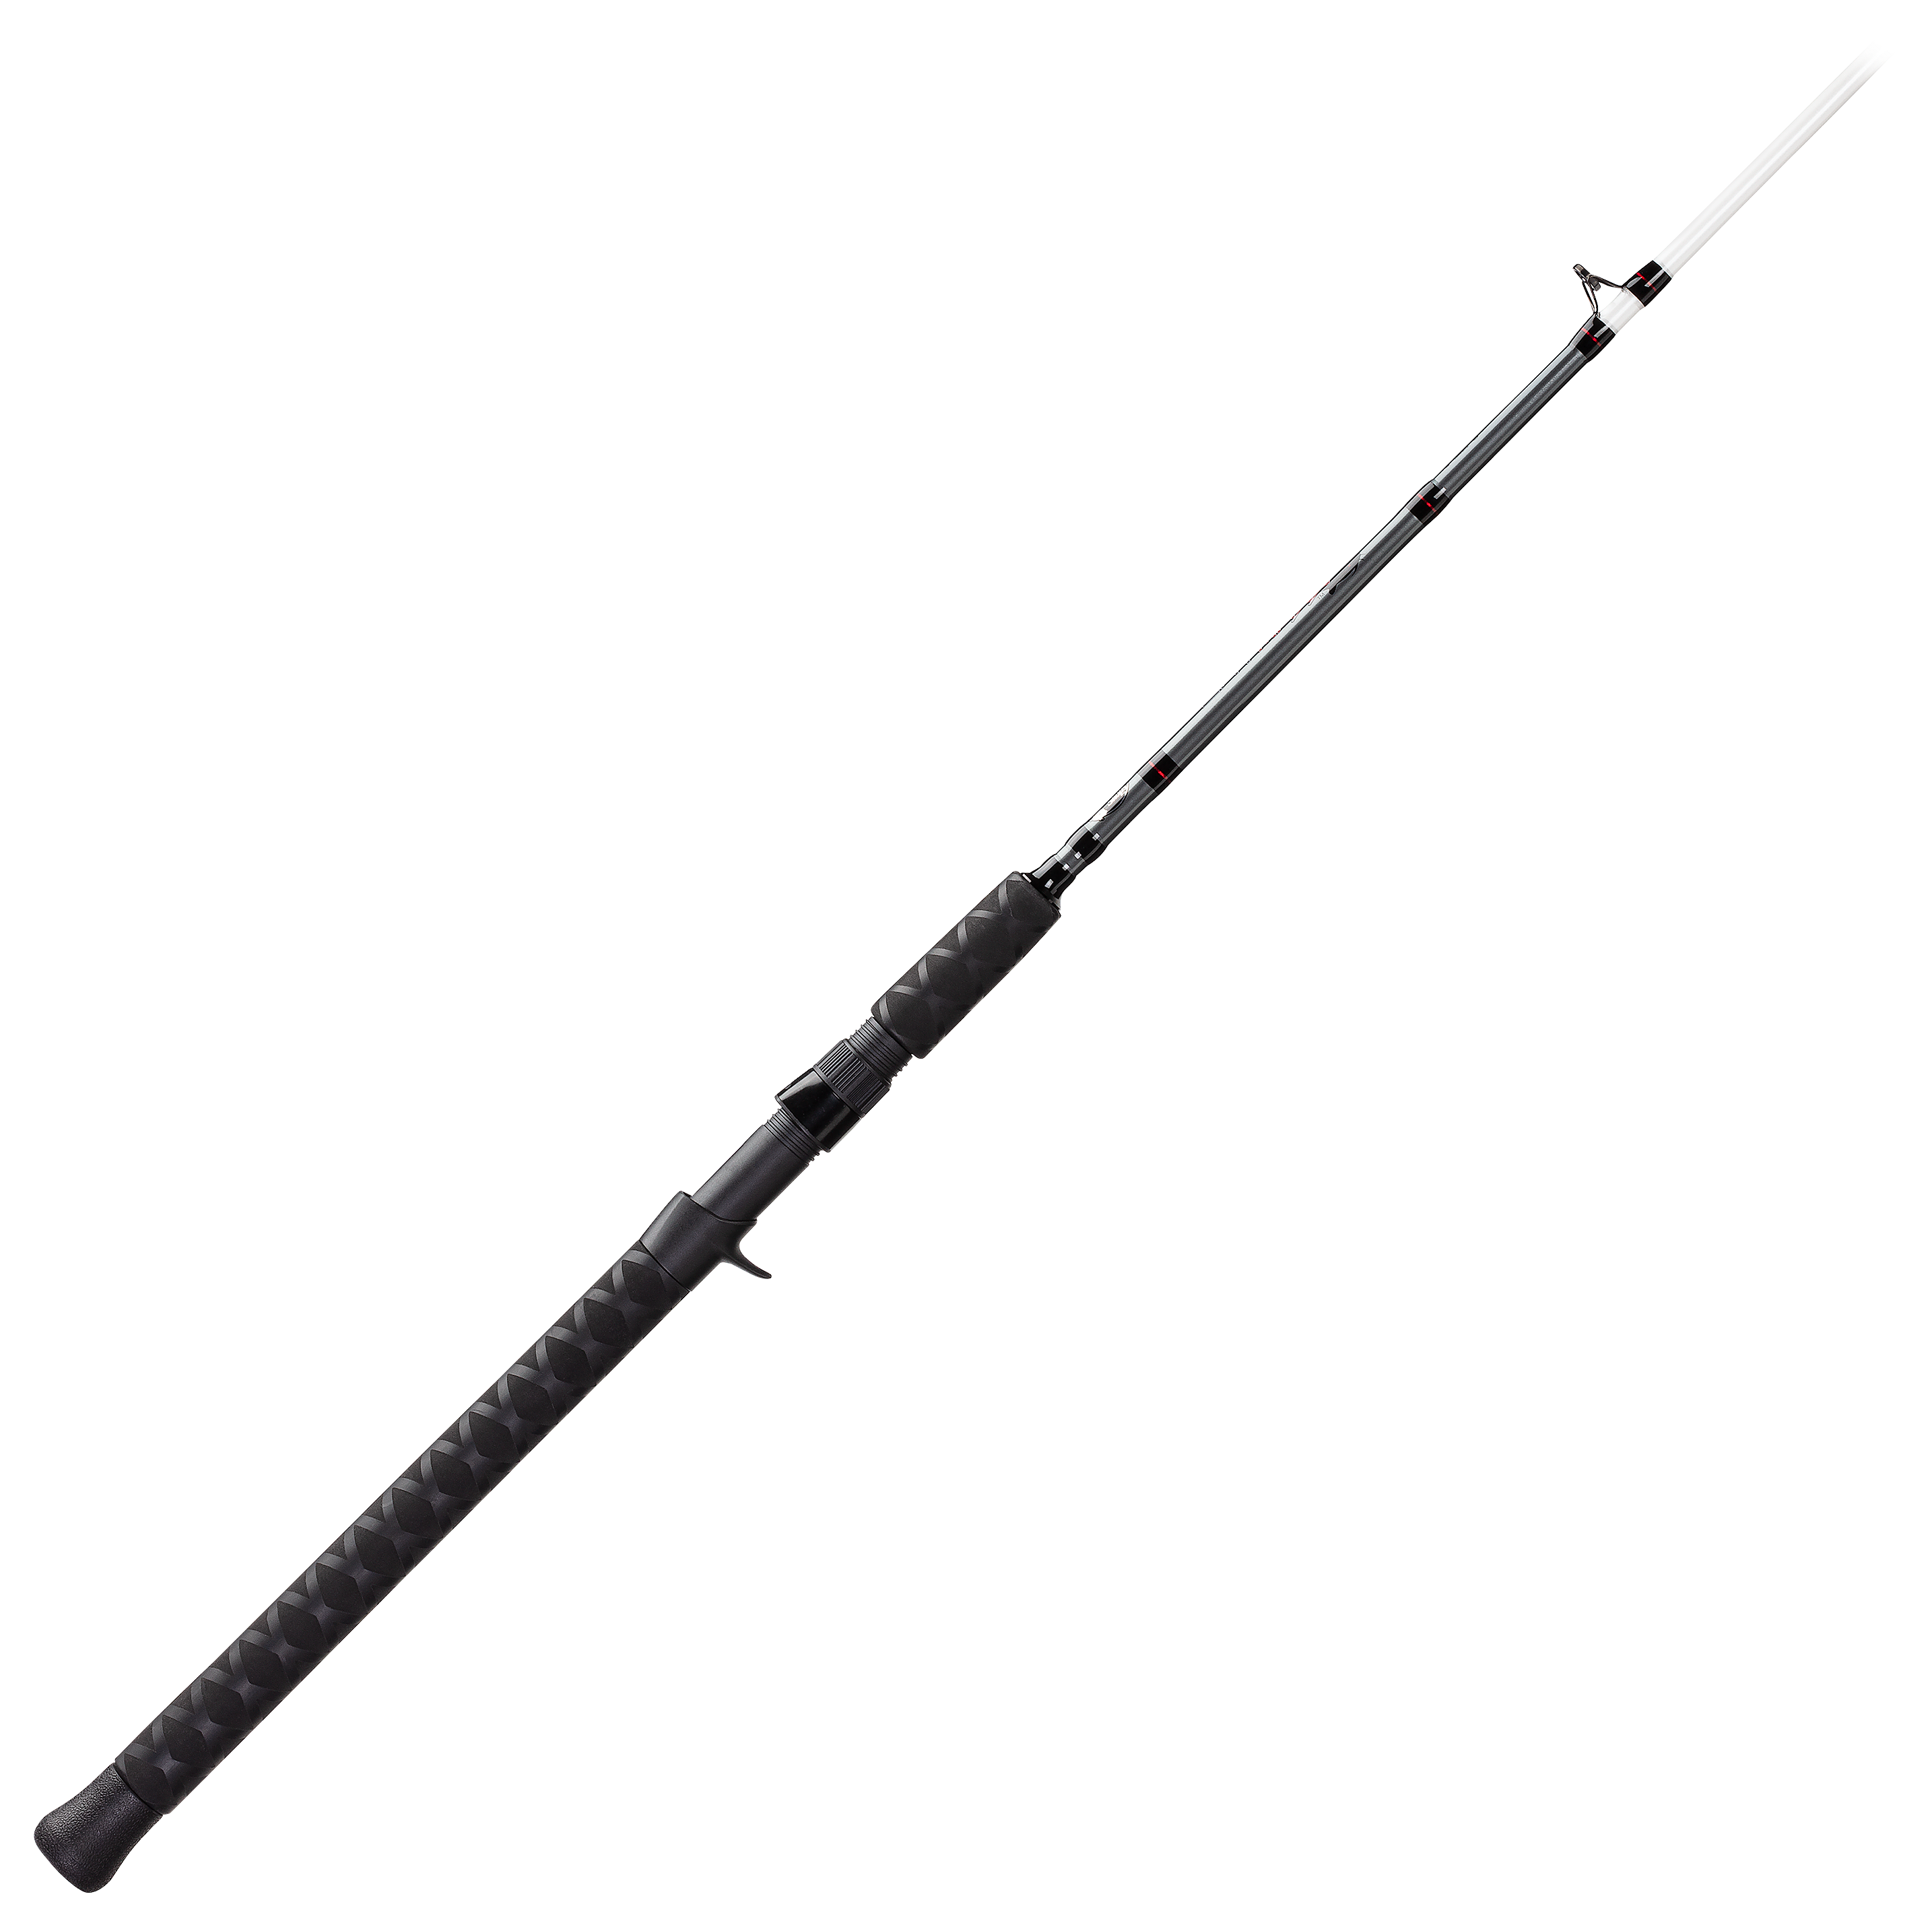 Bass Pro Shops CatMaxx Casting Rod - 7' - Medium Heavy - Moderate Fast - 1 Piece -  A